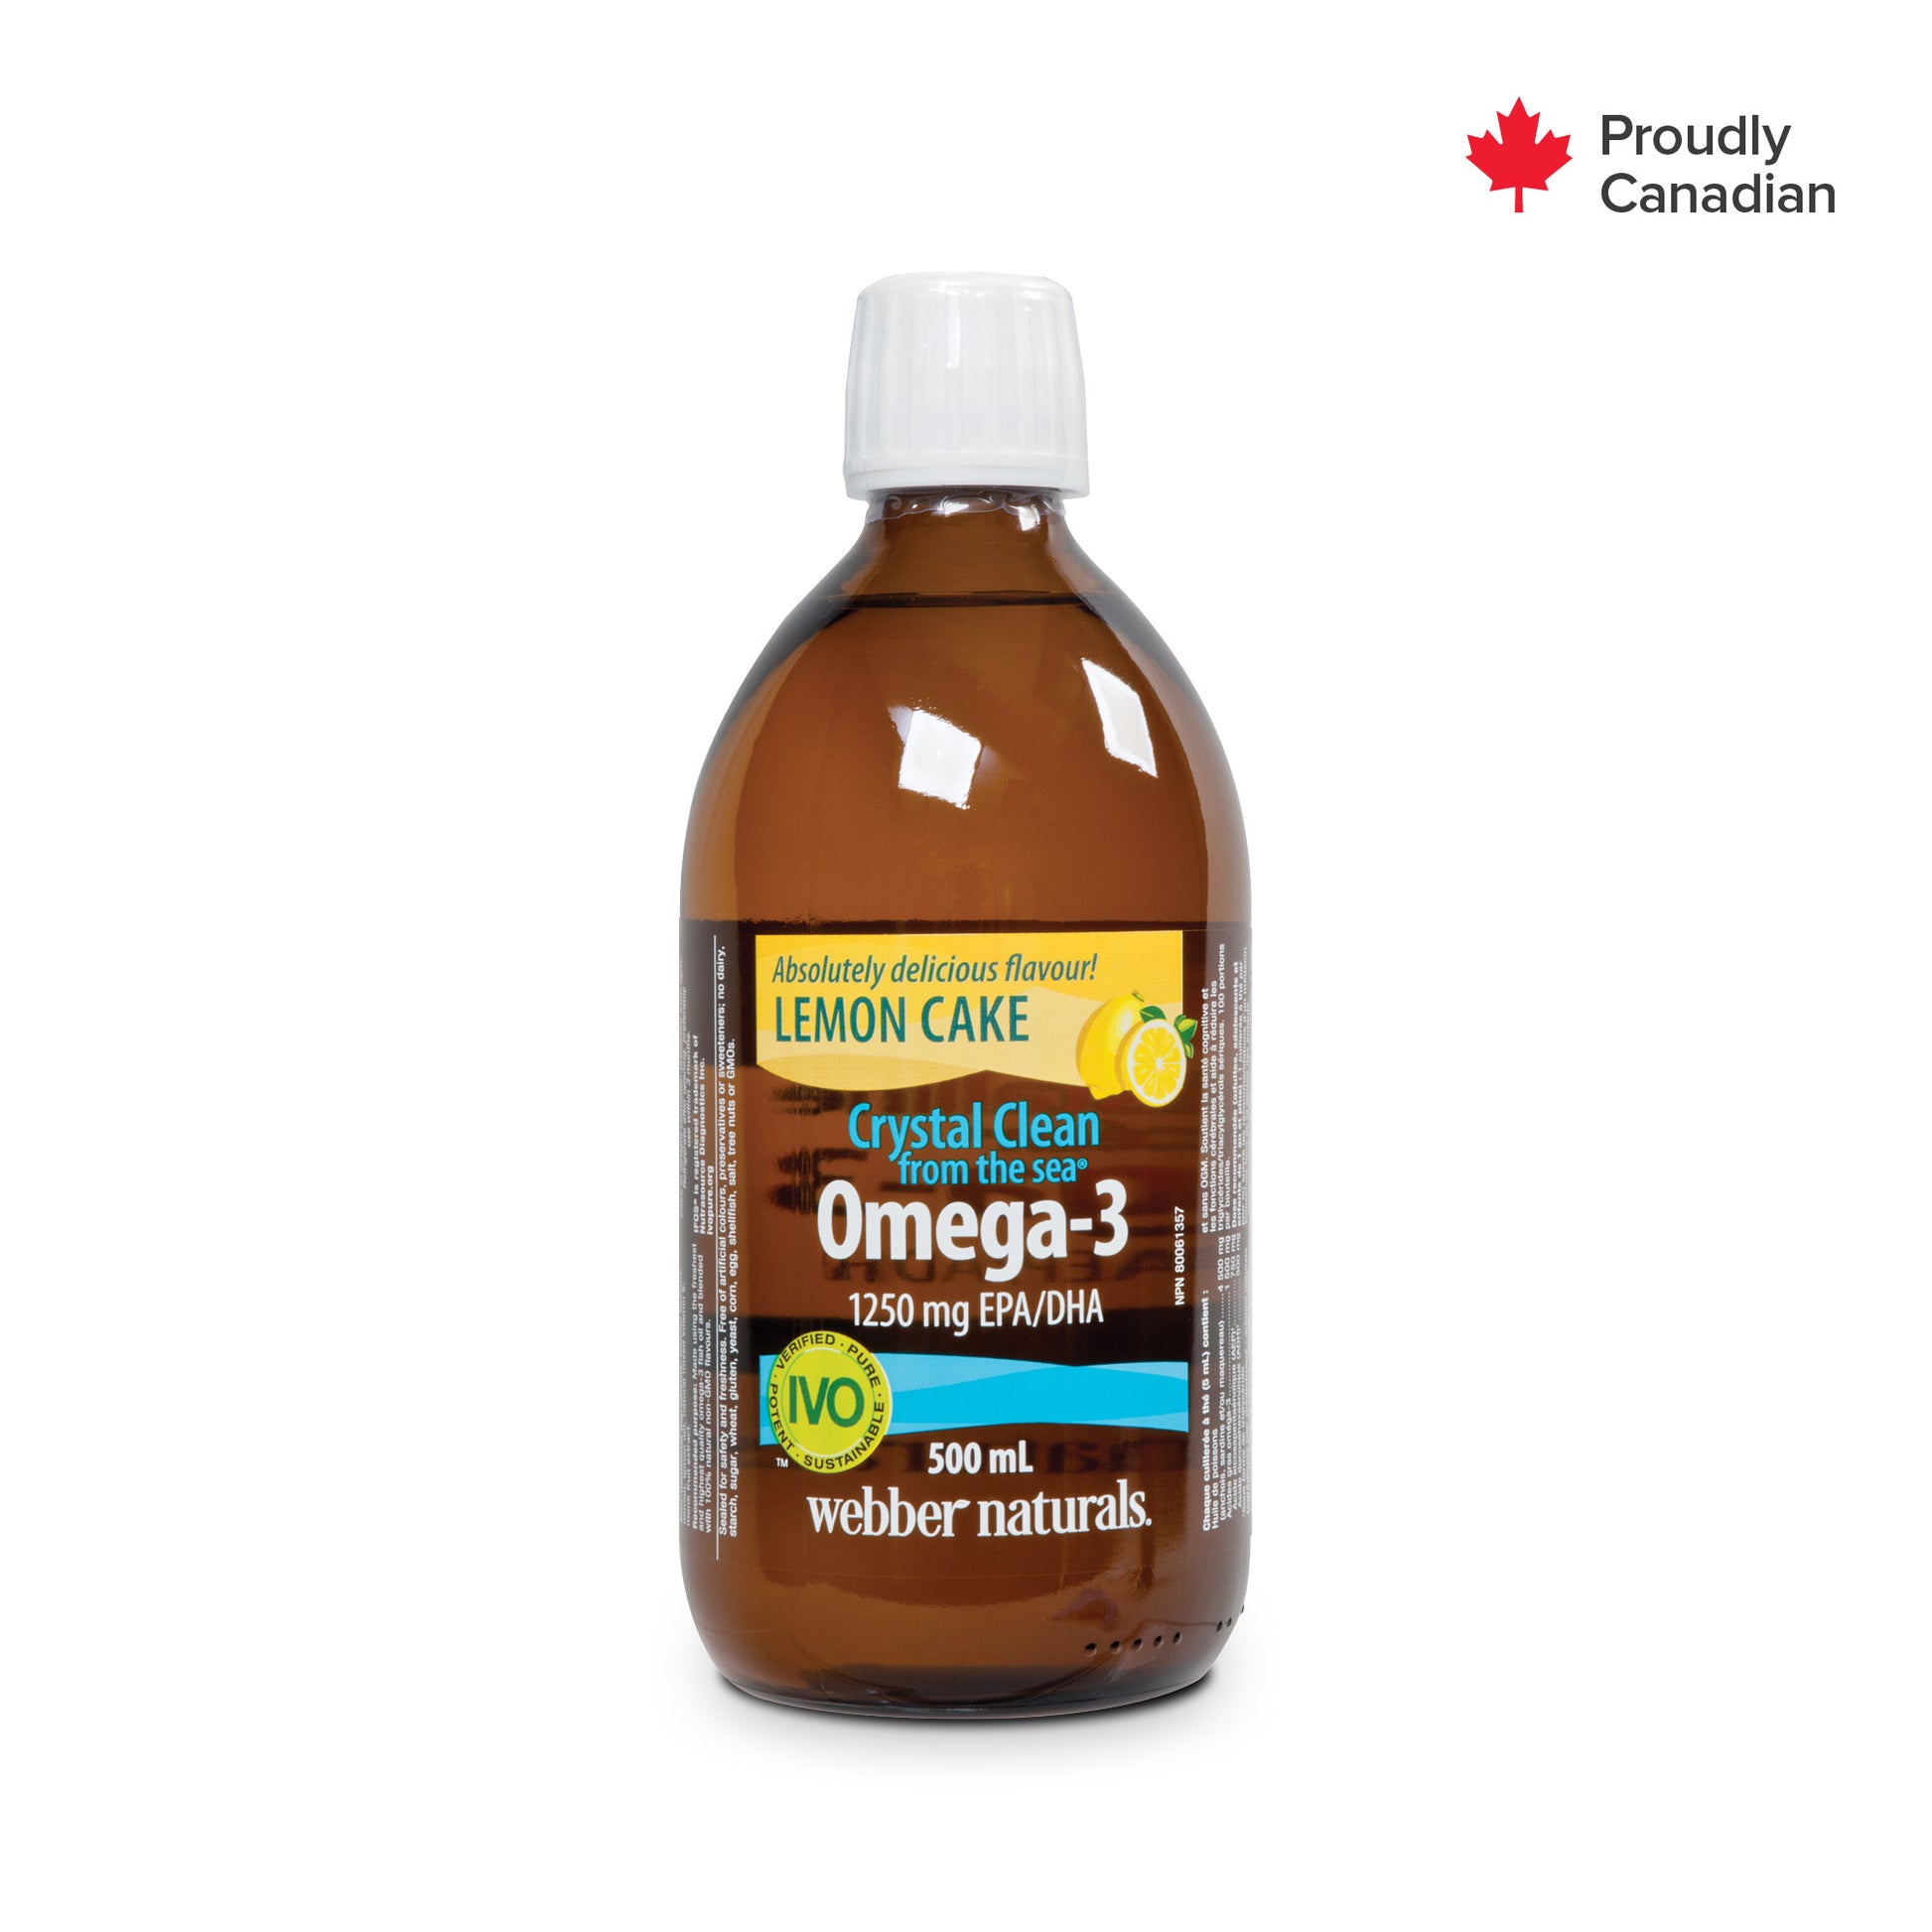 Crystal Clean from the sea® Omega-3 1250 mg EPA/DHA Lemon Cake for Webber Naturals|v|hi-res|WN3497